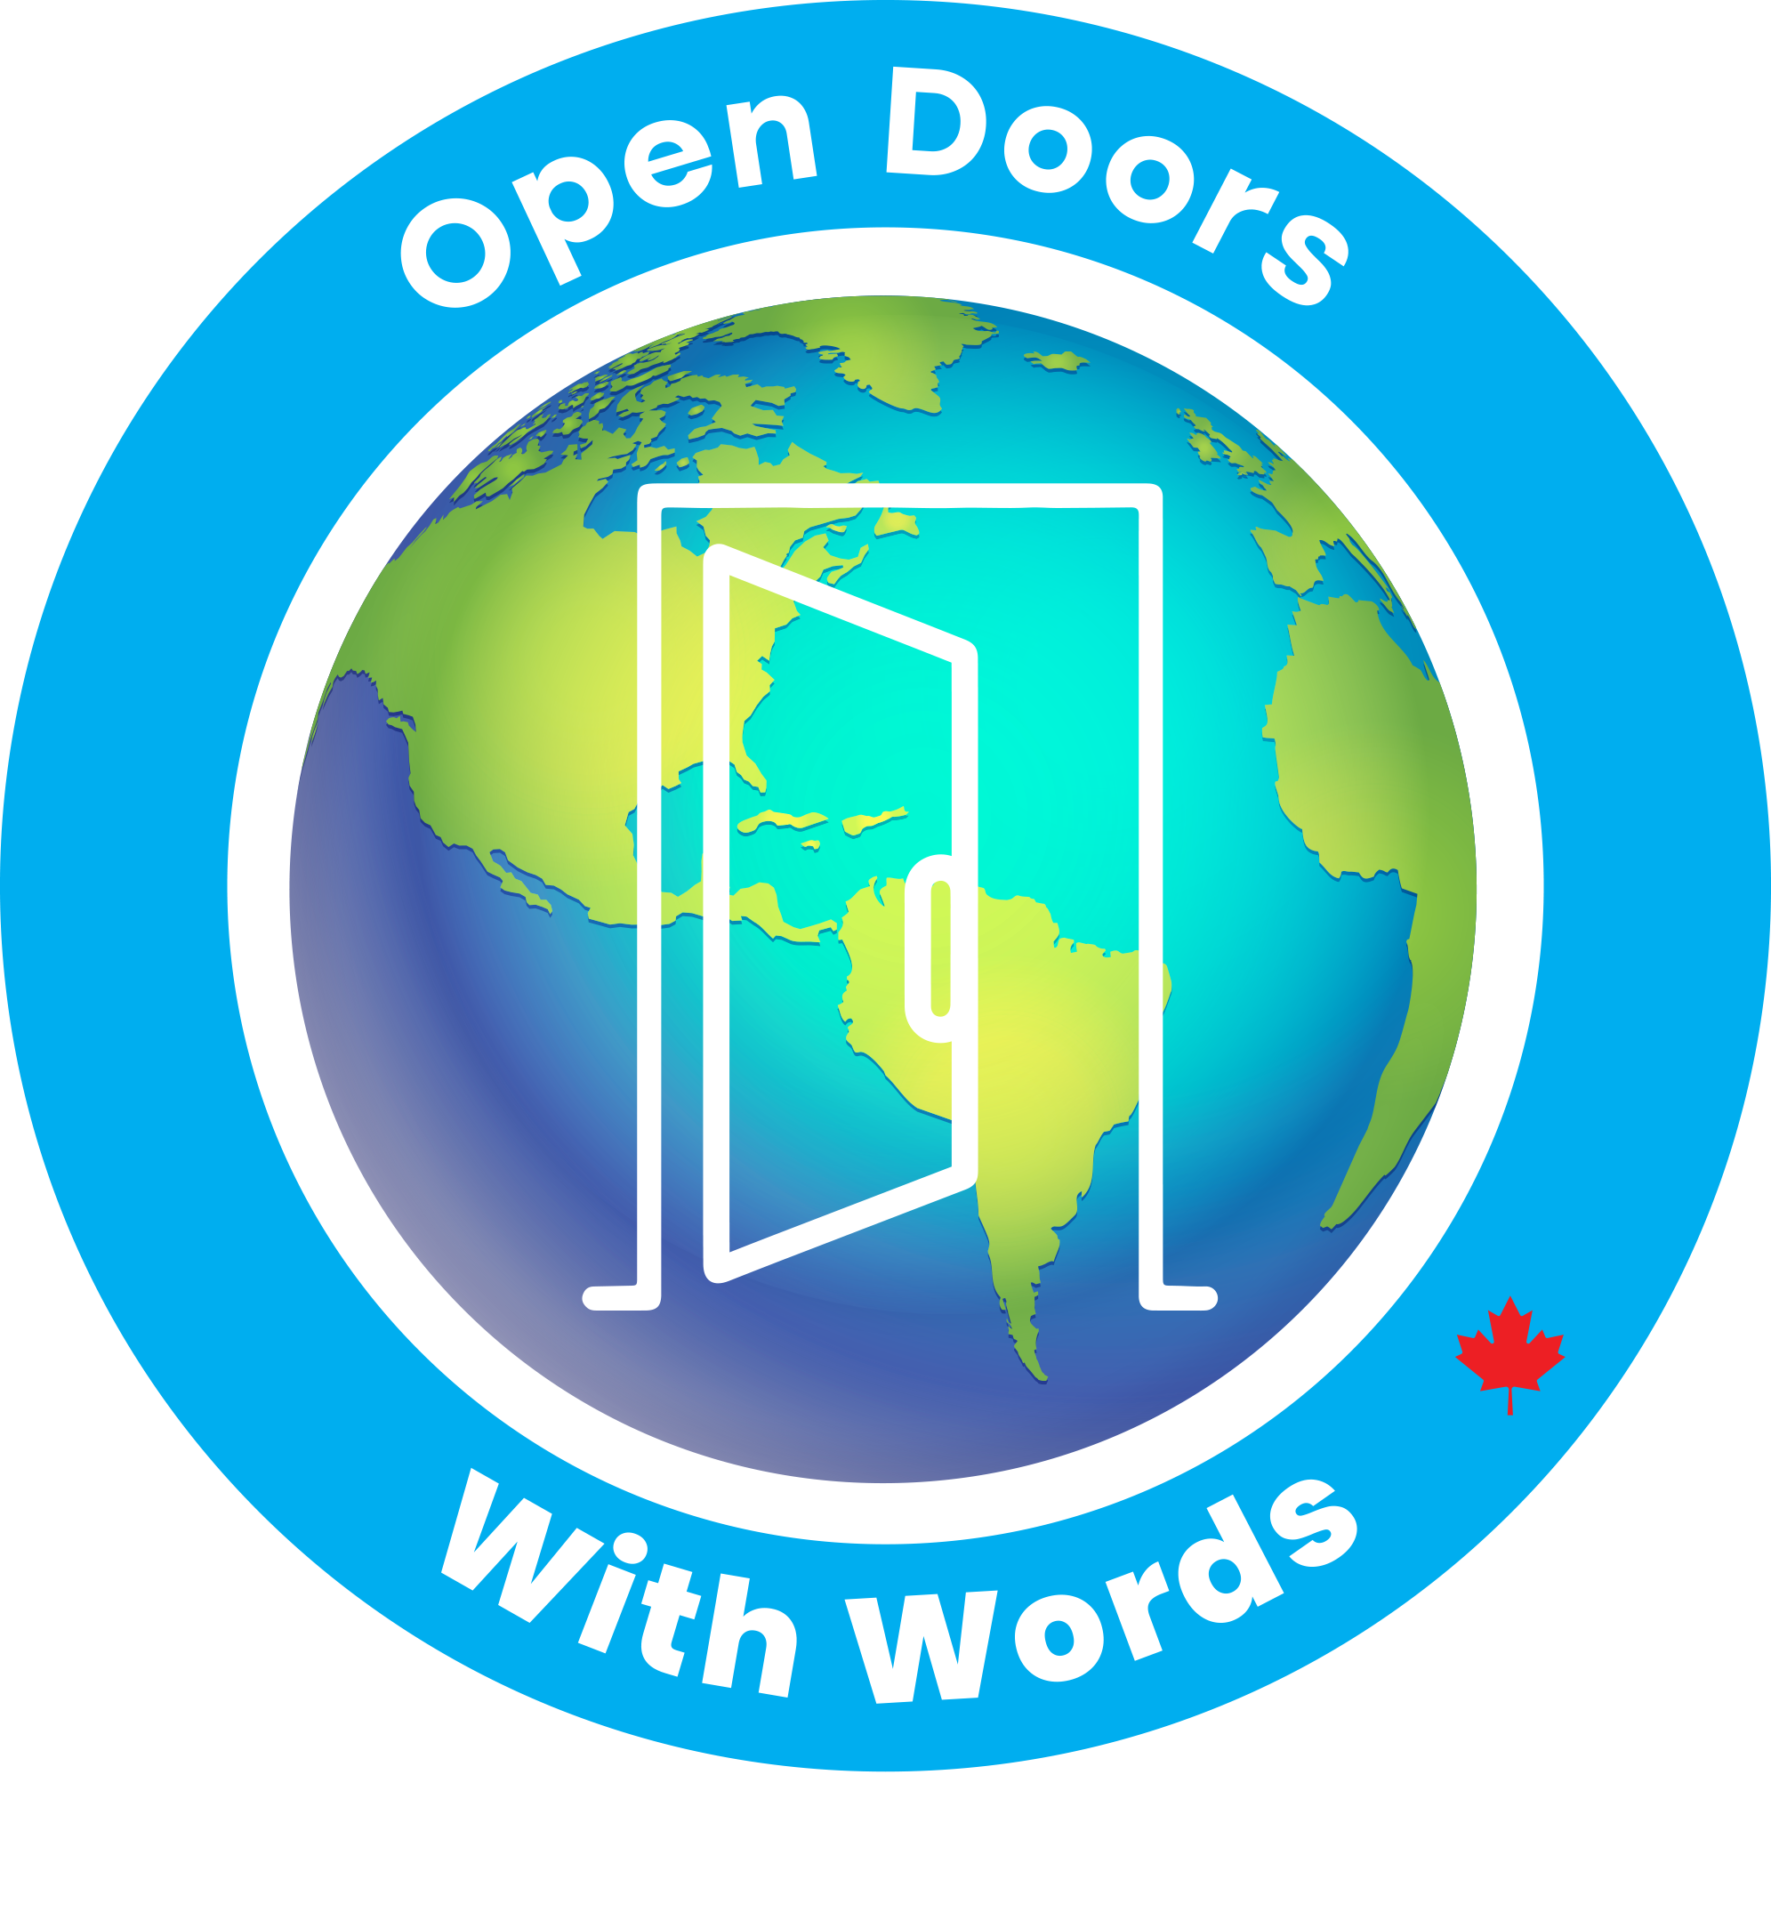 (c) Opendoorswithwords.com